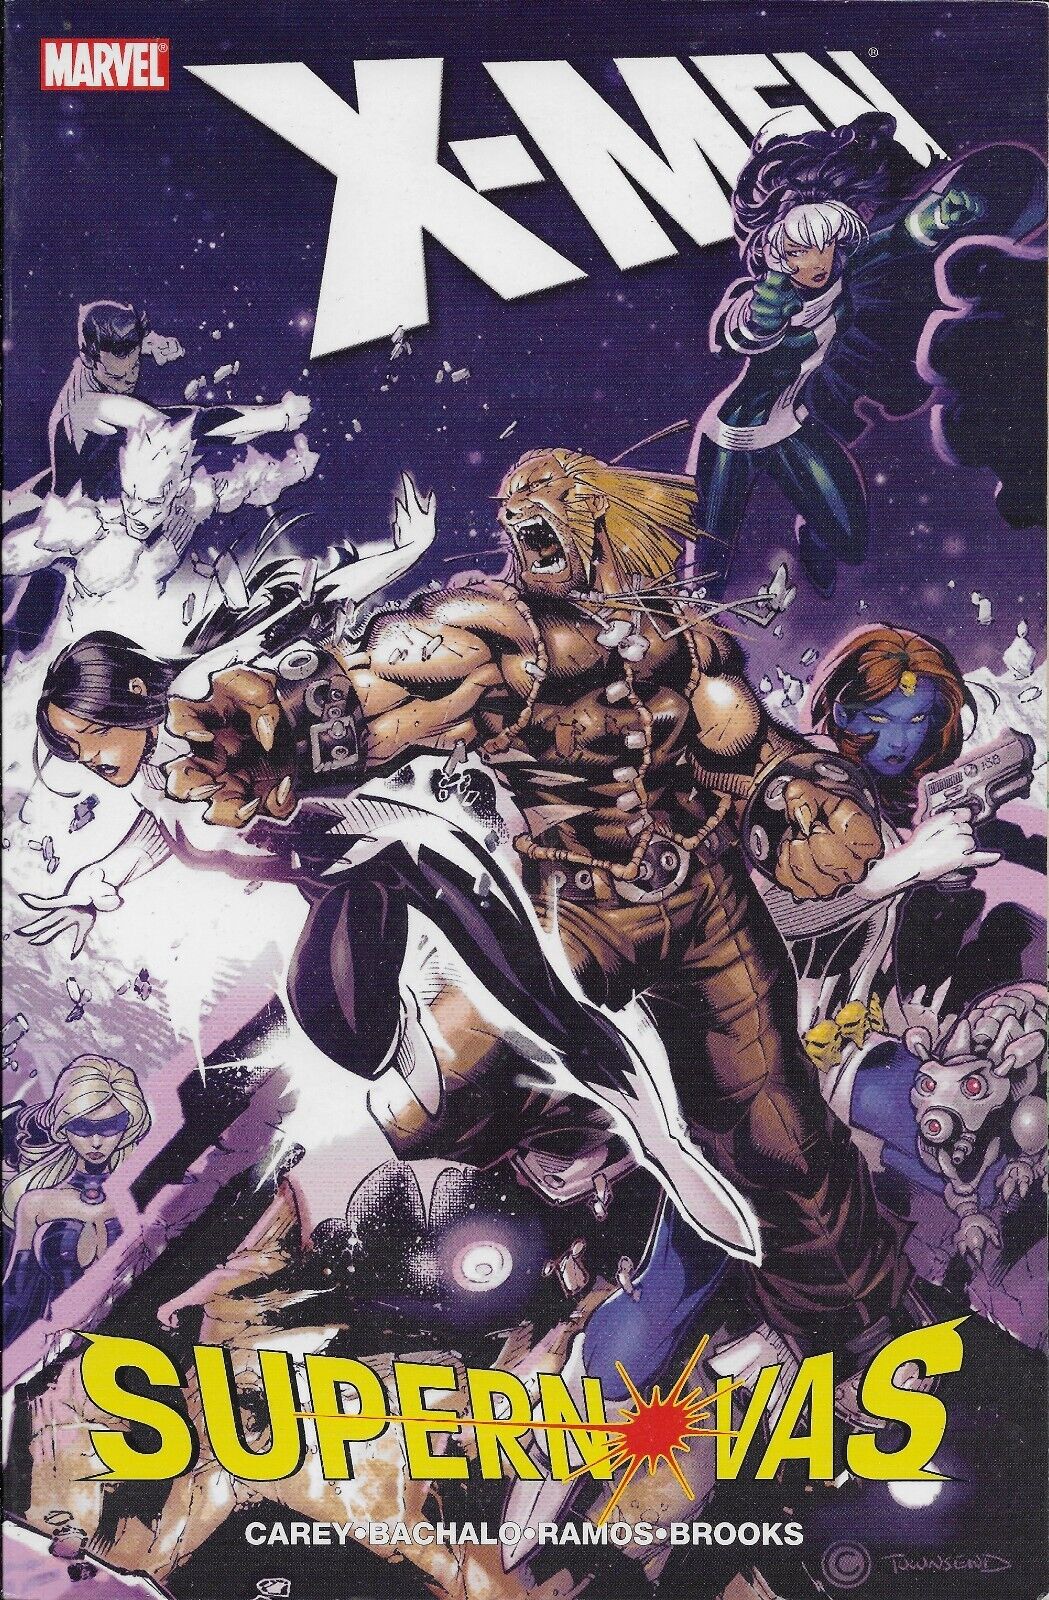 X-Men: Supernovas (2008, Marvel) Marvel Graphic Novel by Mike Carey, TPB